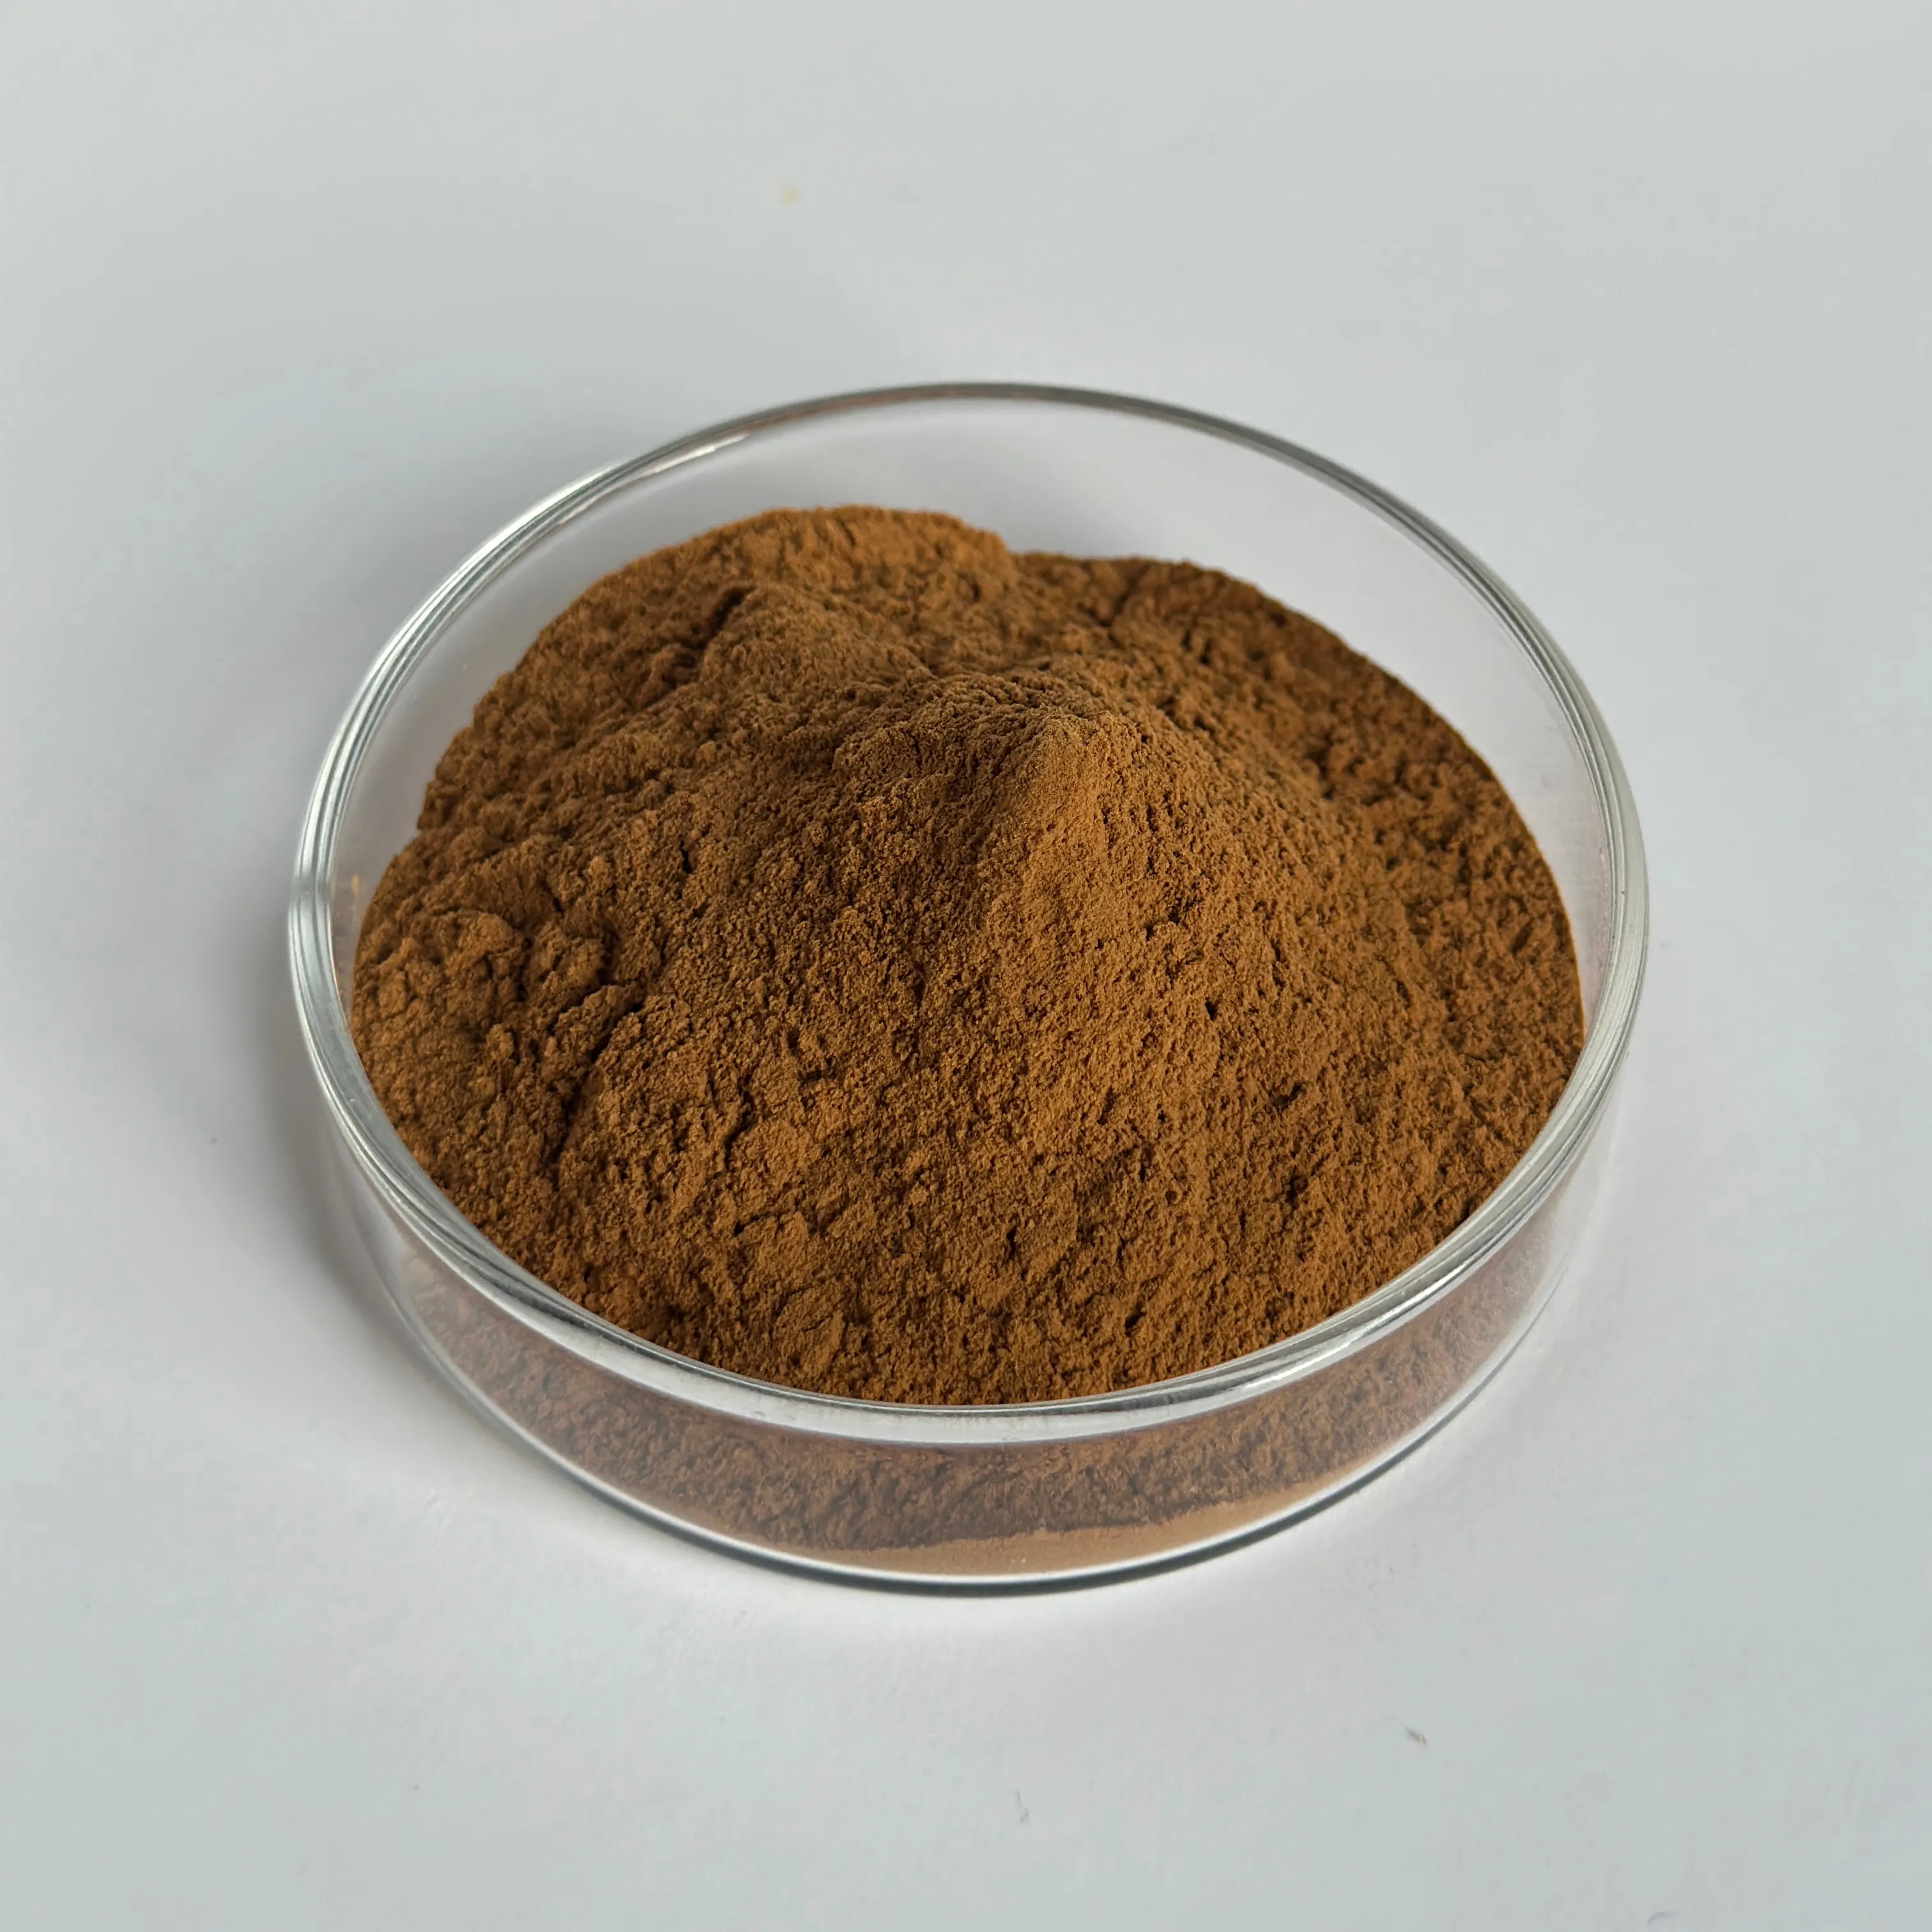 100% Natural Piper Nigrum Extract Powder